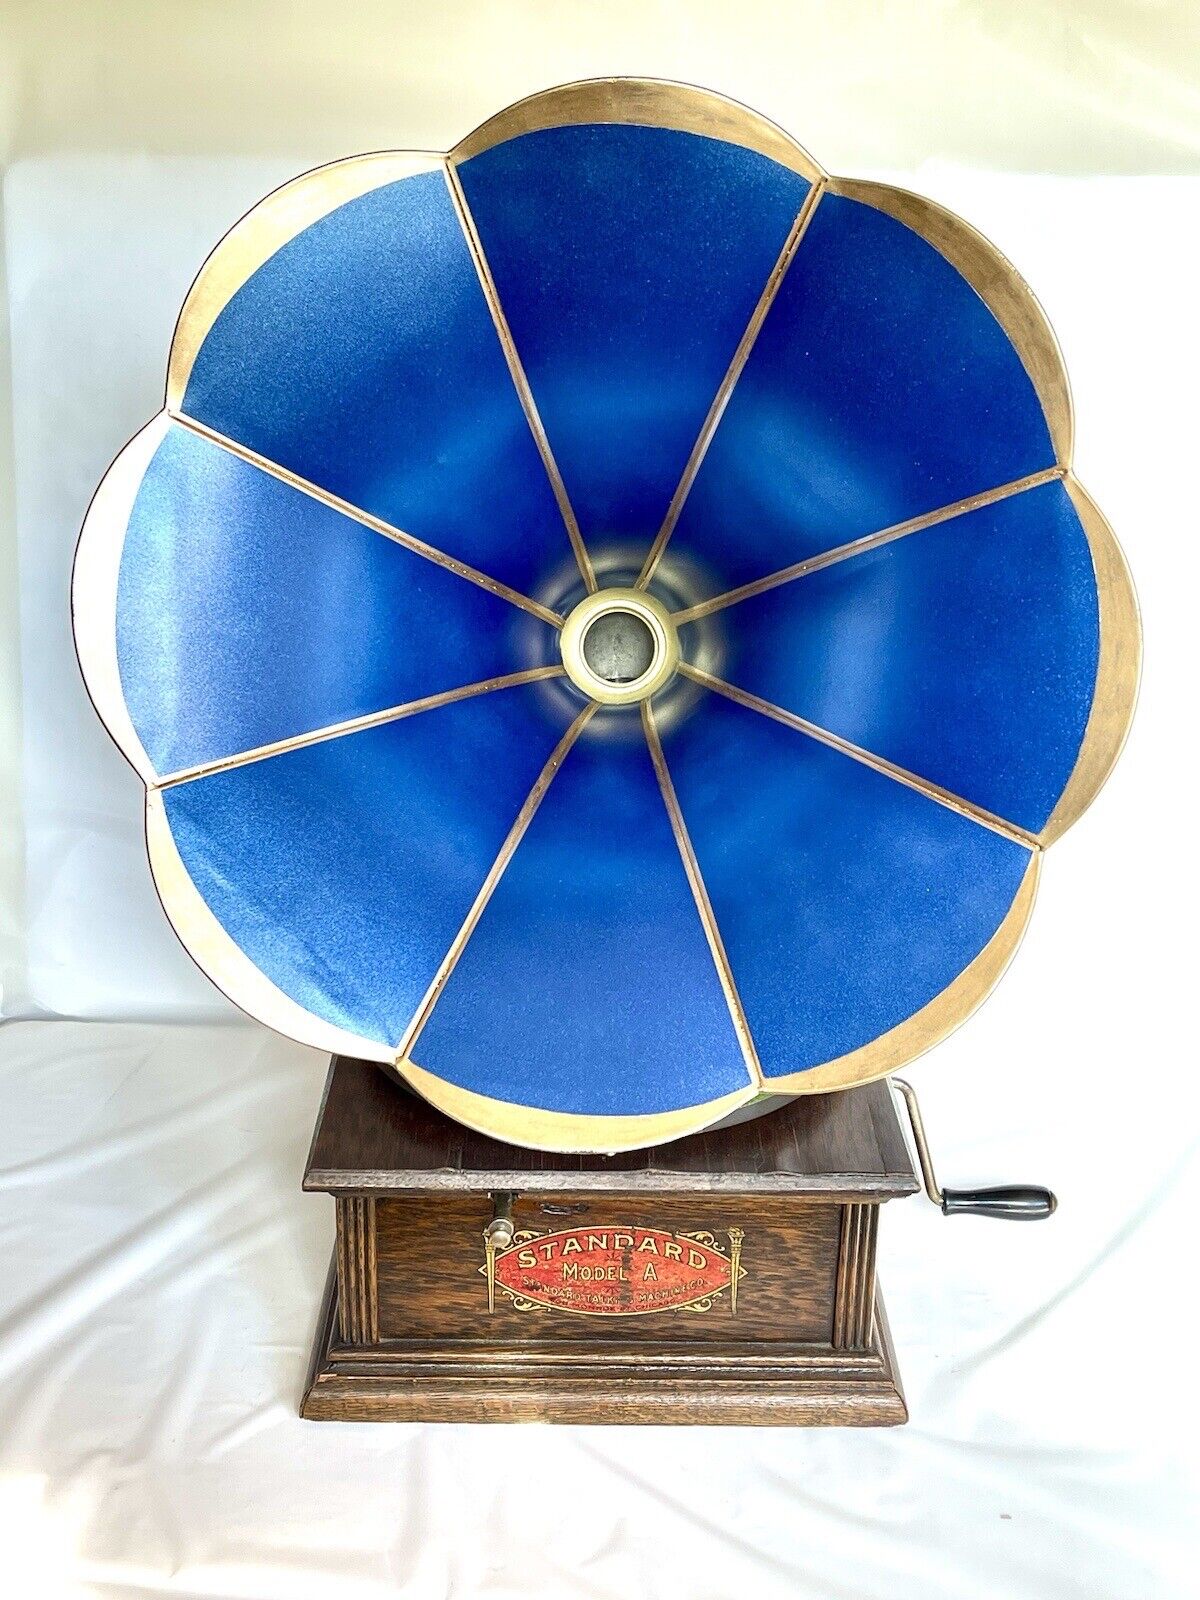 Antique STANDARD MODEL A TALKING MACHINE Phonograph GRAPHOPHONE RESTORED RECORDS